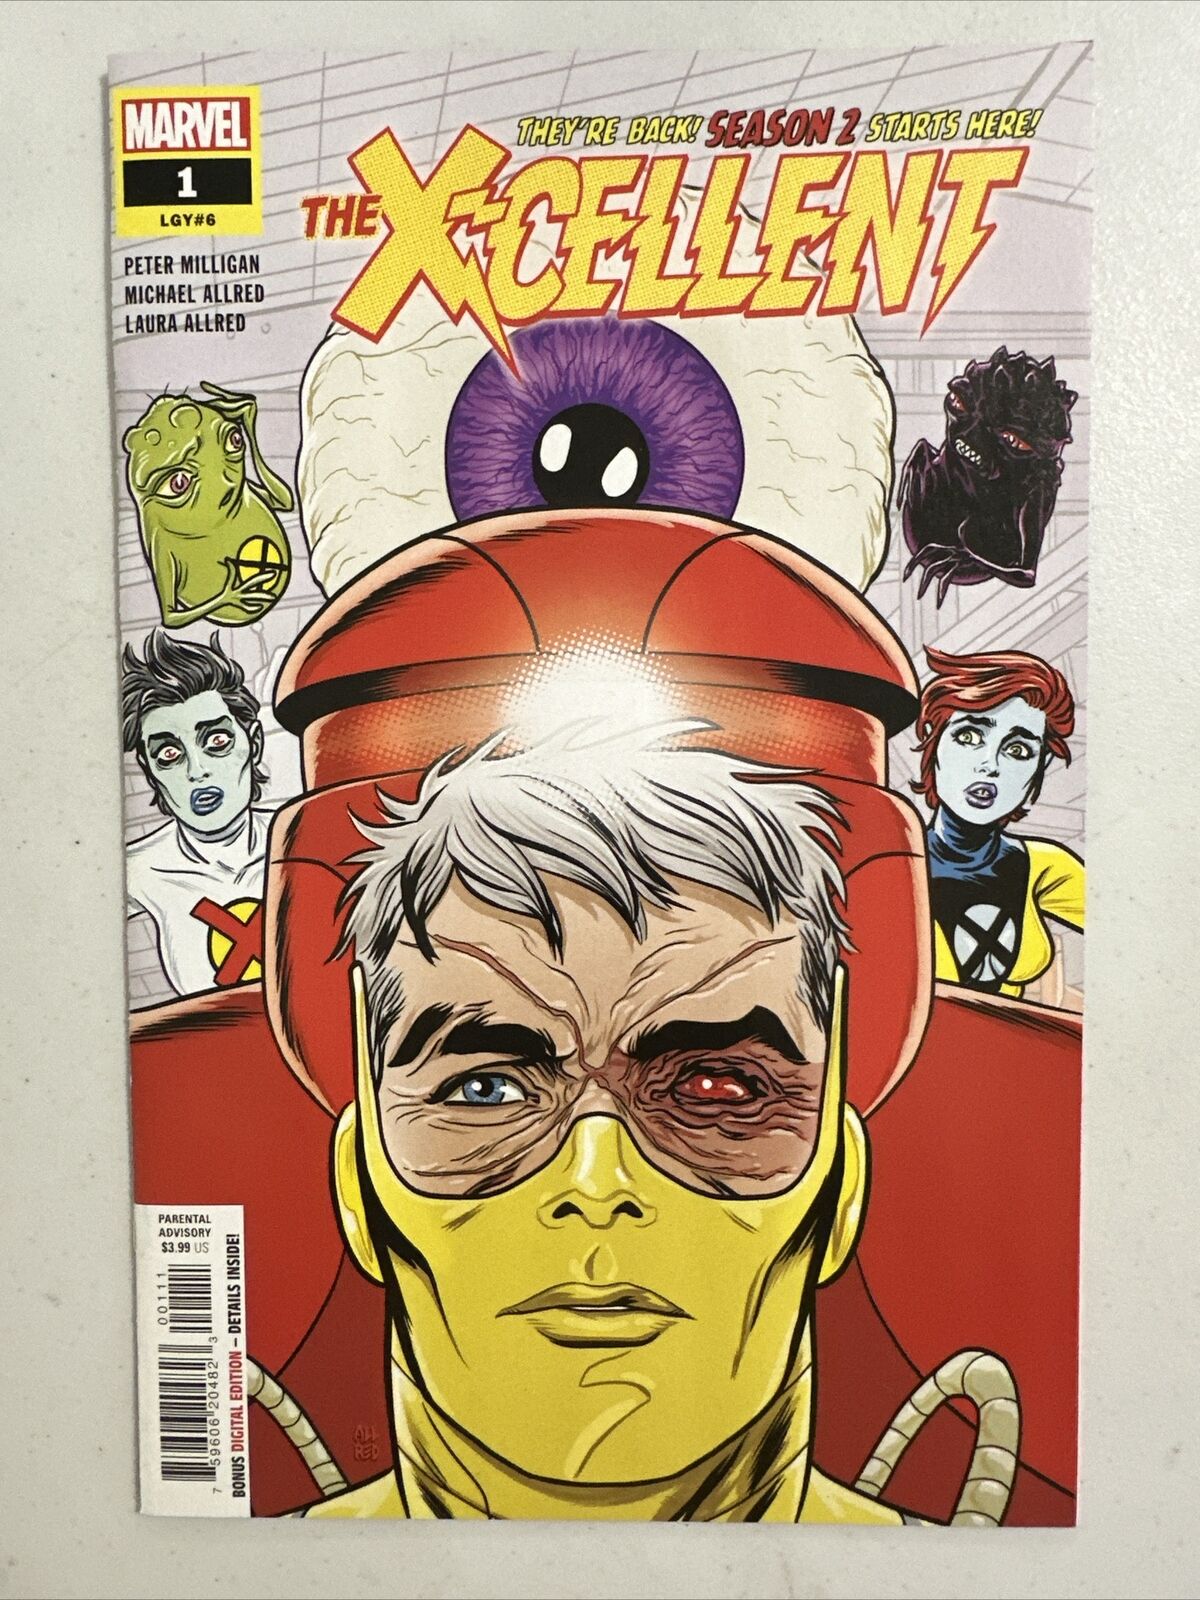 The X-Cellent #1 Marvel Comics HIGH GRADE COMBINE S&H